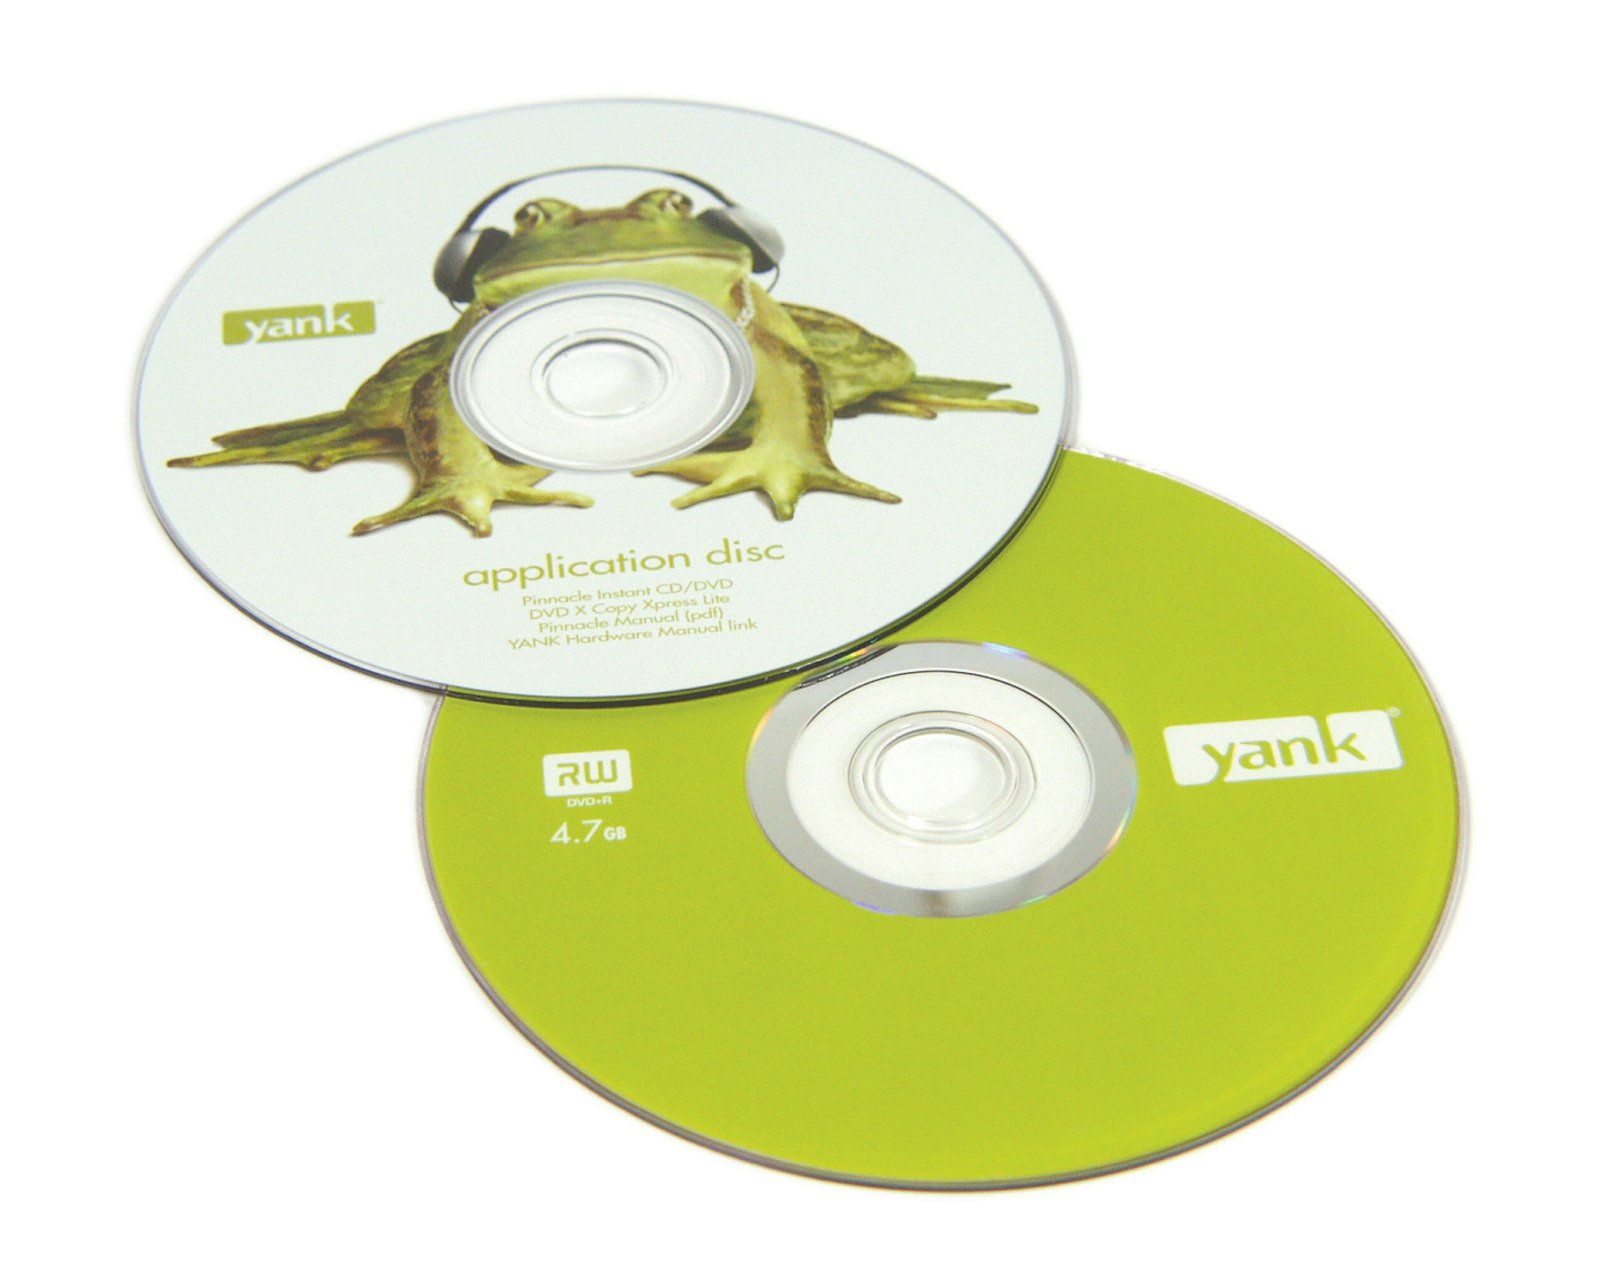 Yank branding and logo design on cds.